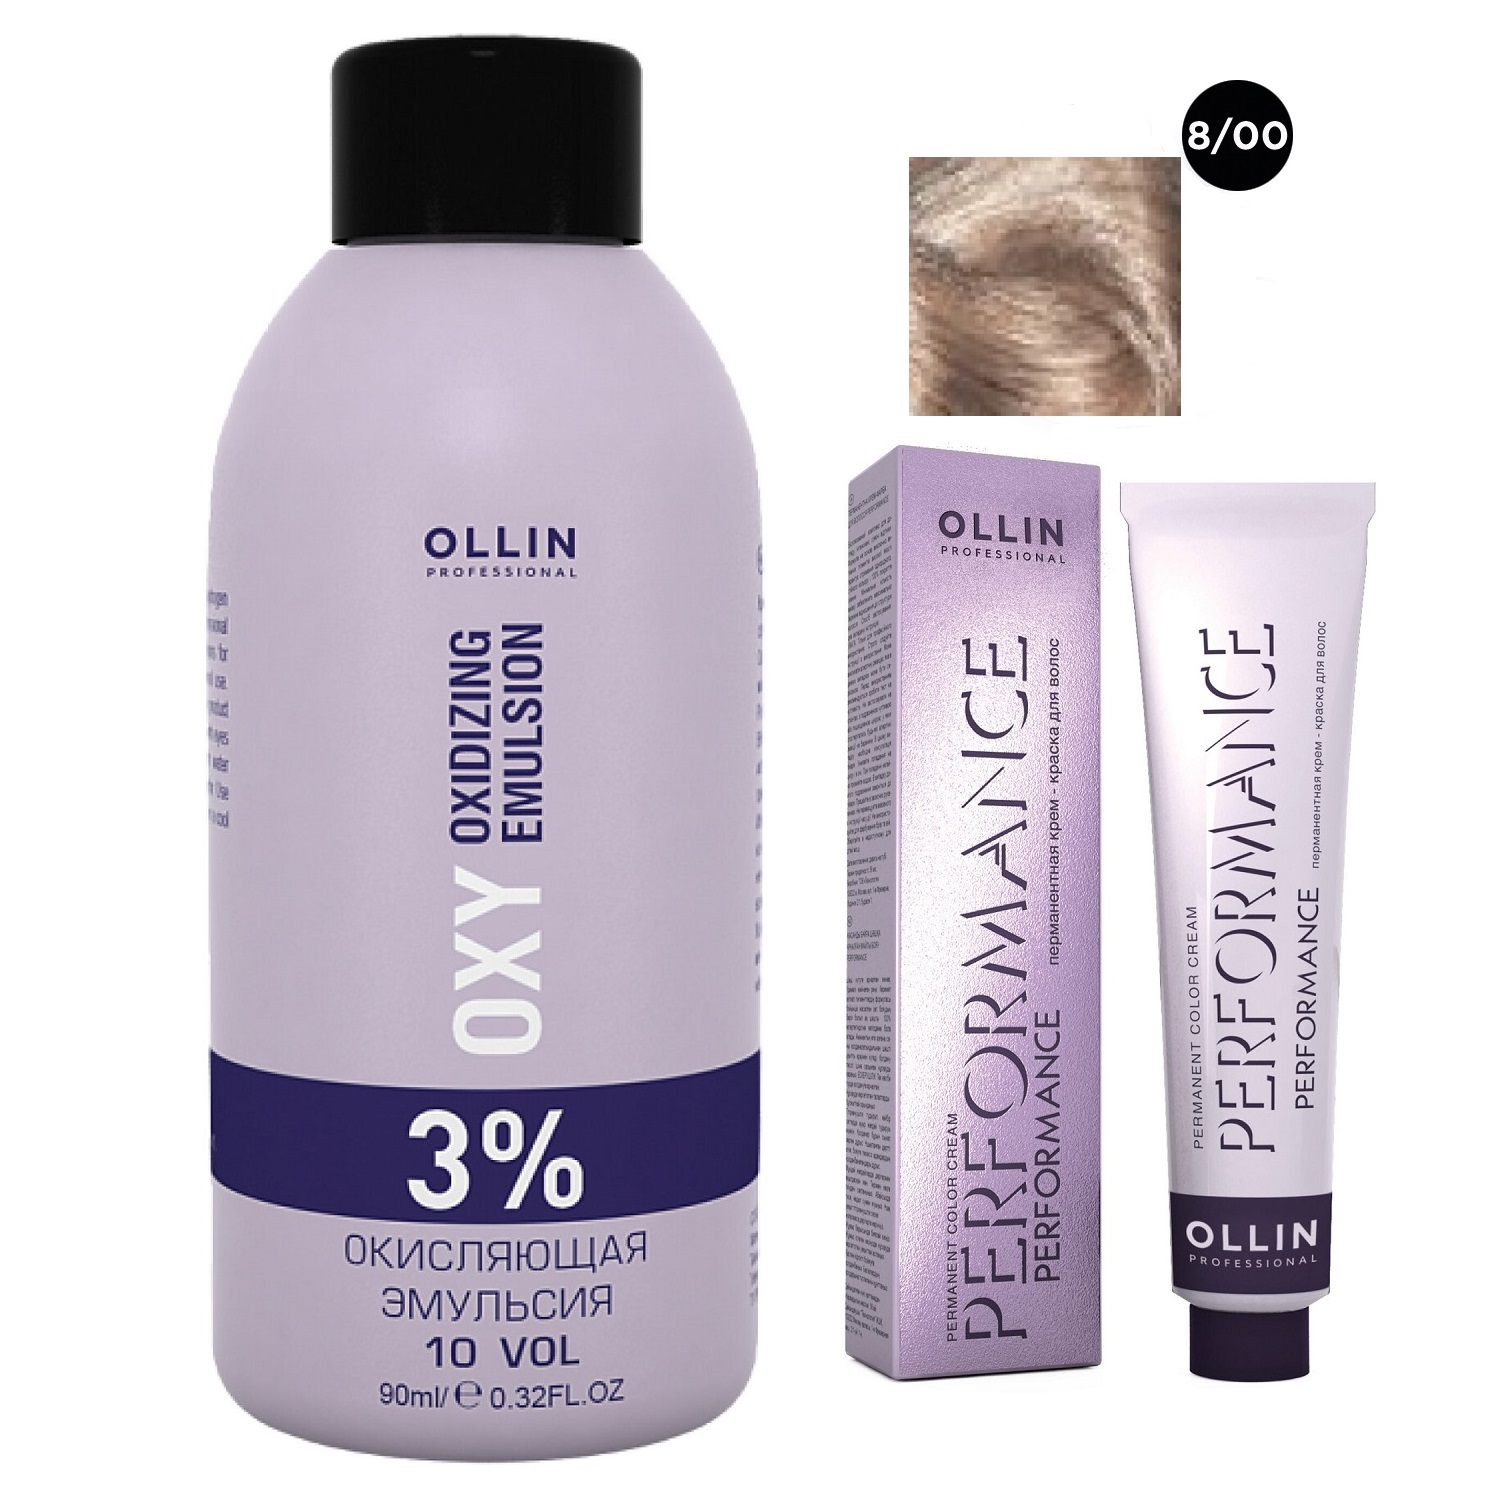 Ollin Professional Набор Перманентная крем-краска для волос Ollin Performance оттенок 8/00 светло-русый глубокий 60 мл + Окисляющая эмульсия Oxy 3% 90 мл (Ollin Professional, Performance)